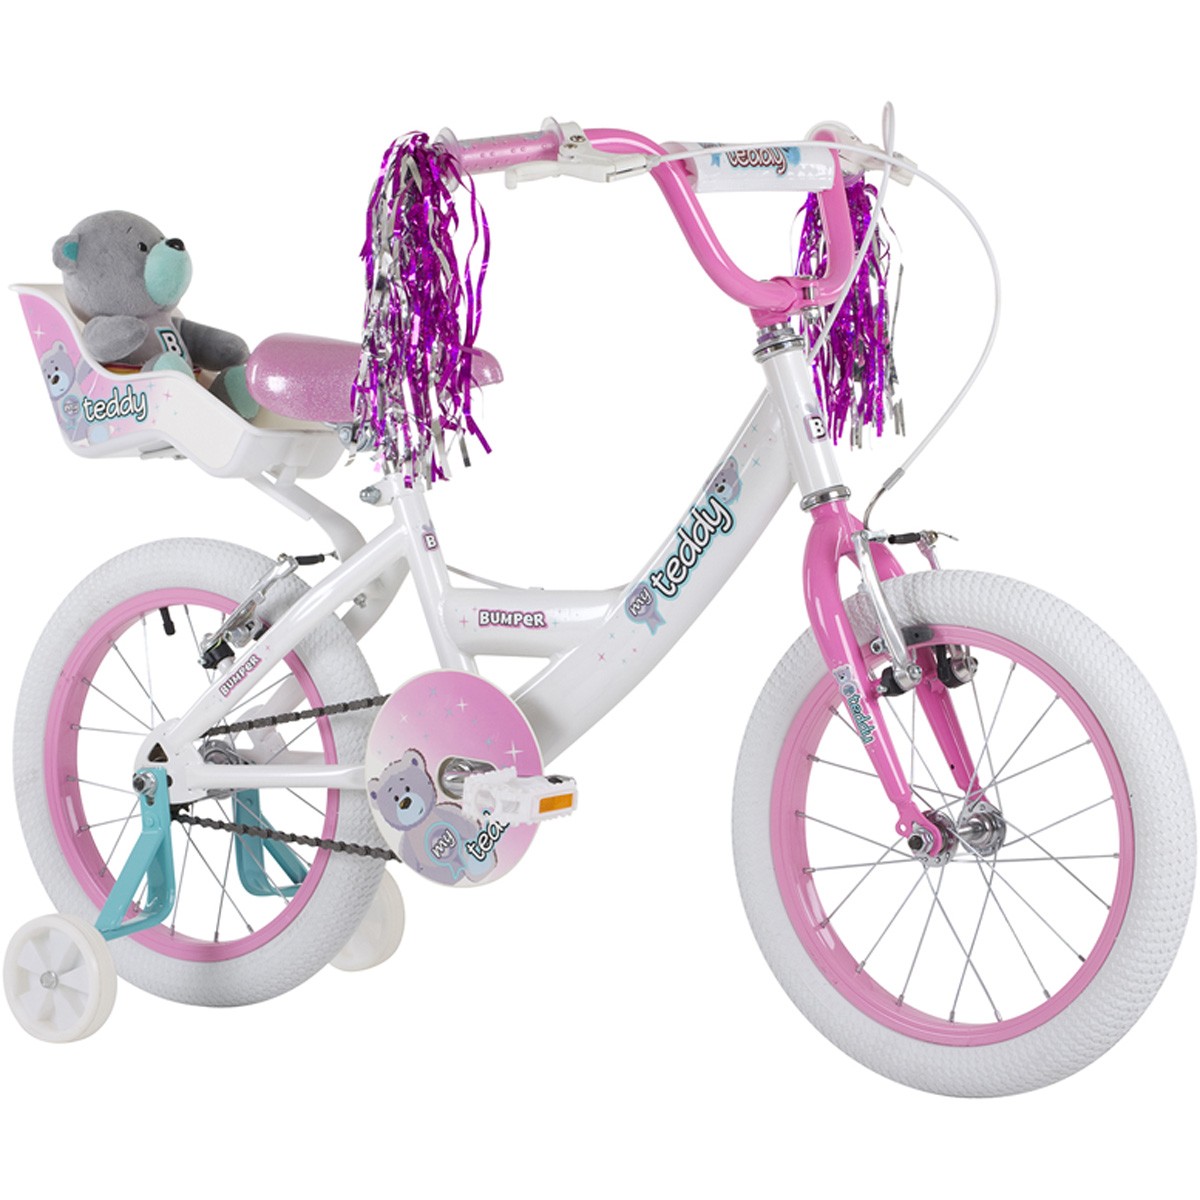 18 inch bikes for girls